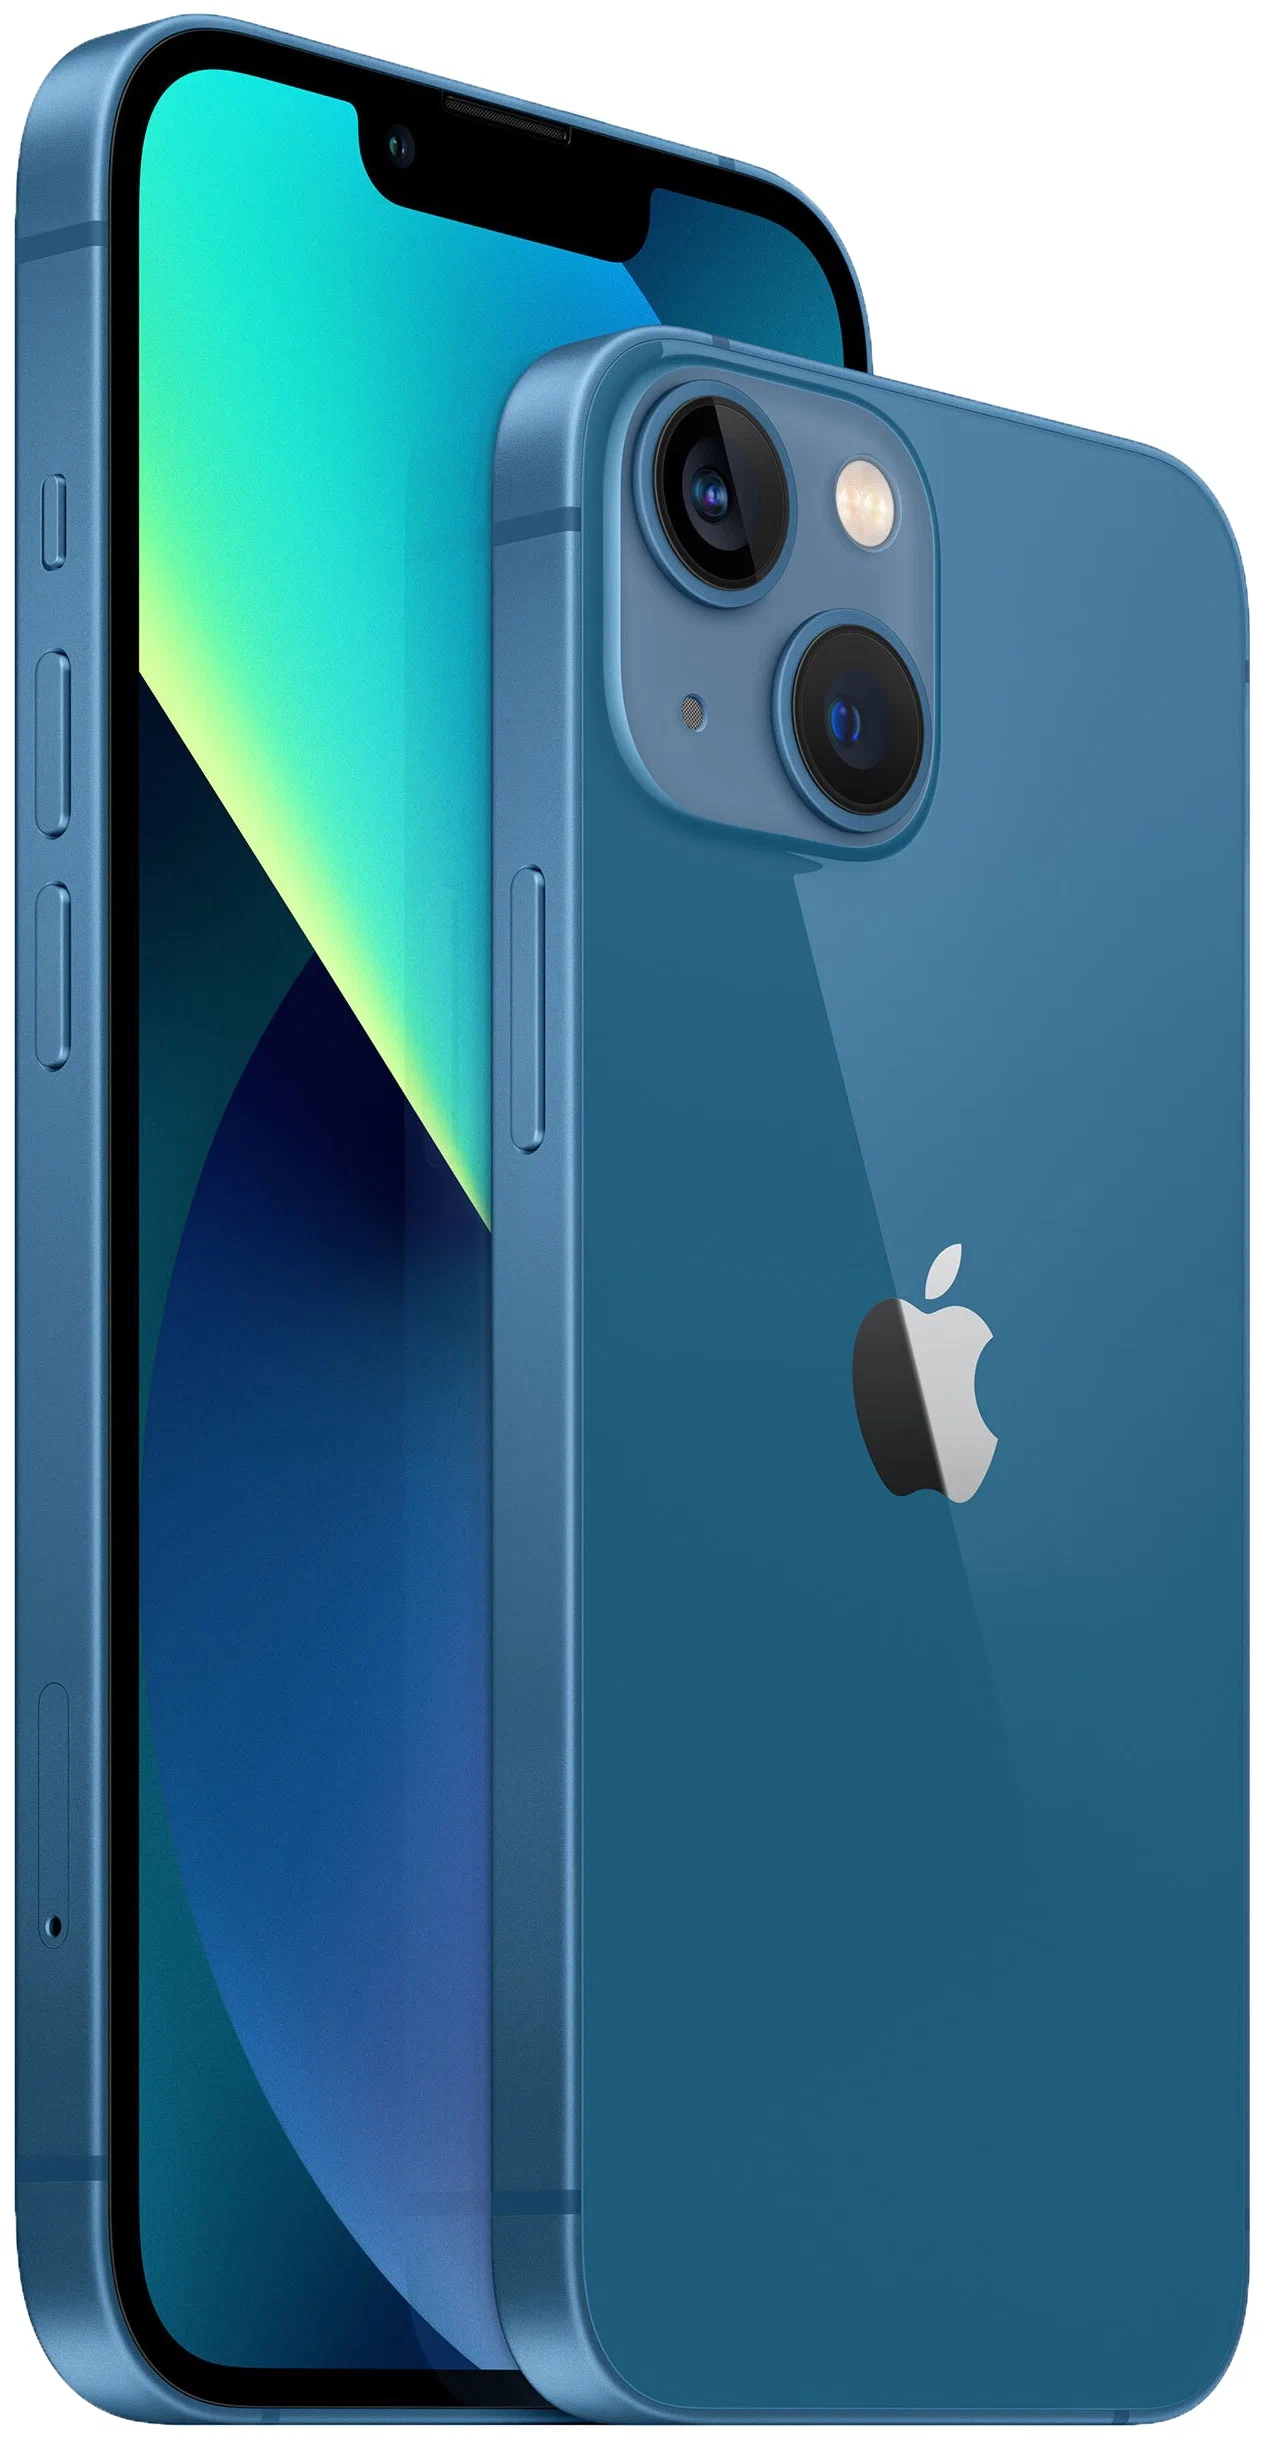 Смартфон Apple iPhone 13 256GB Blue